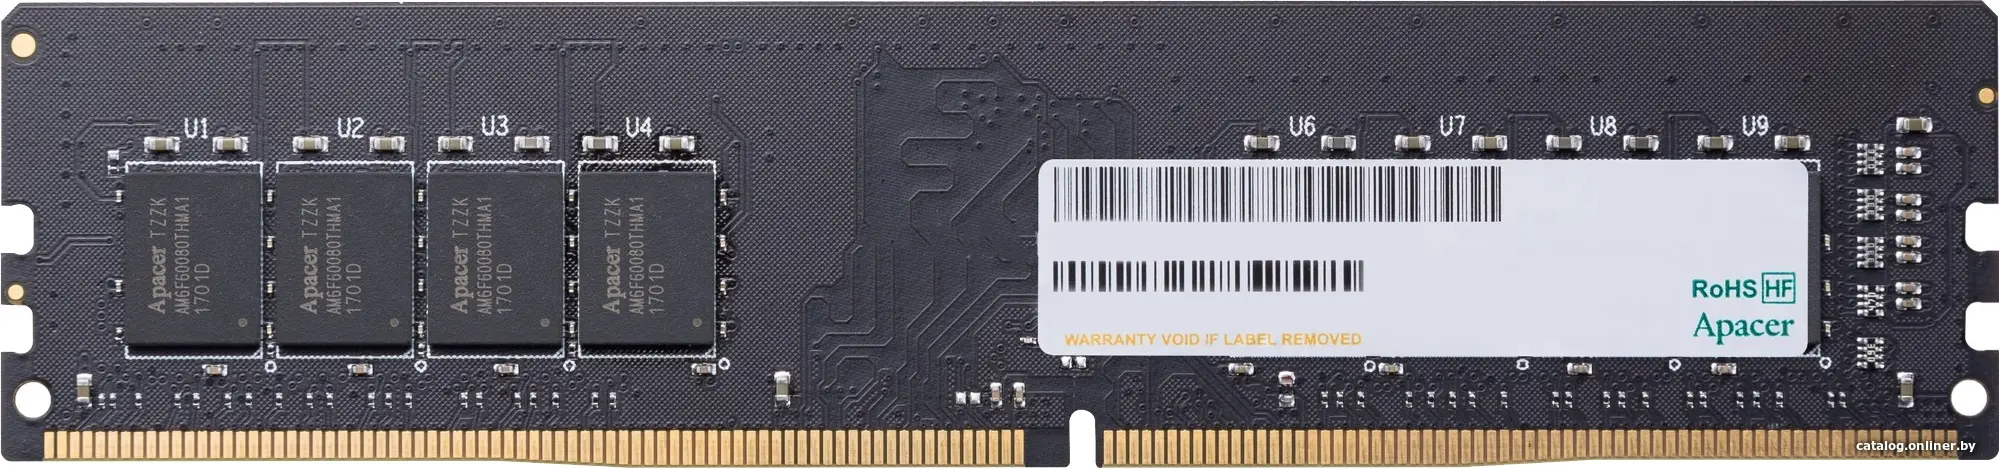 Купить Оперативная память Apacer 32Gb DDR4 (EL.32G21.PSH/AU32GGB32CSBBGH), цена, опт и розница